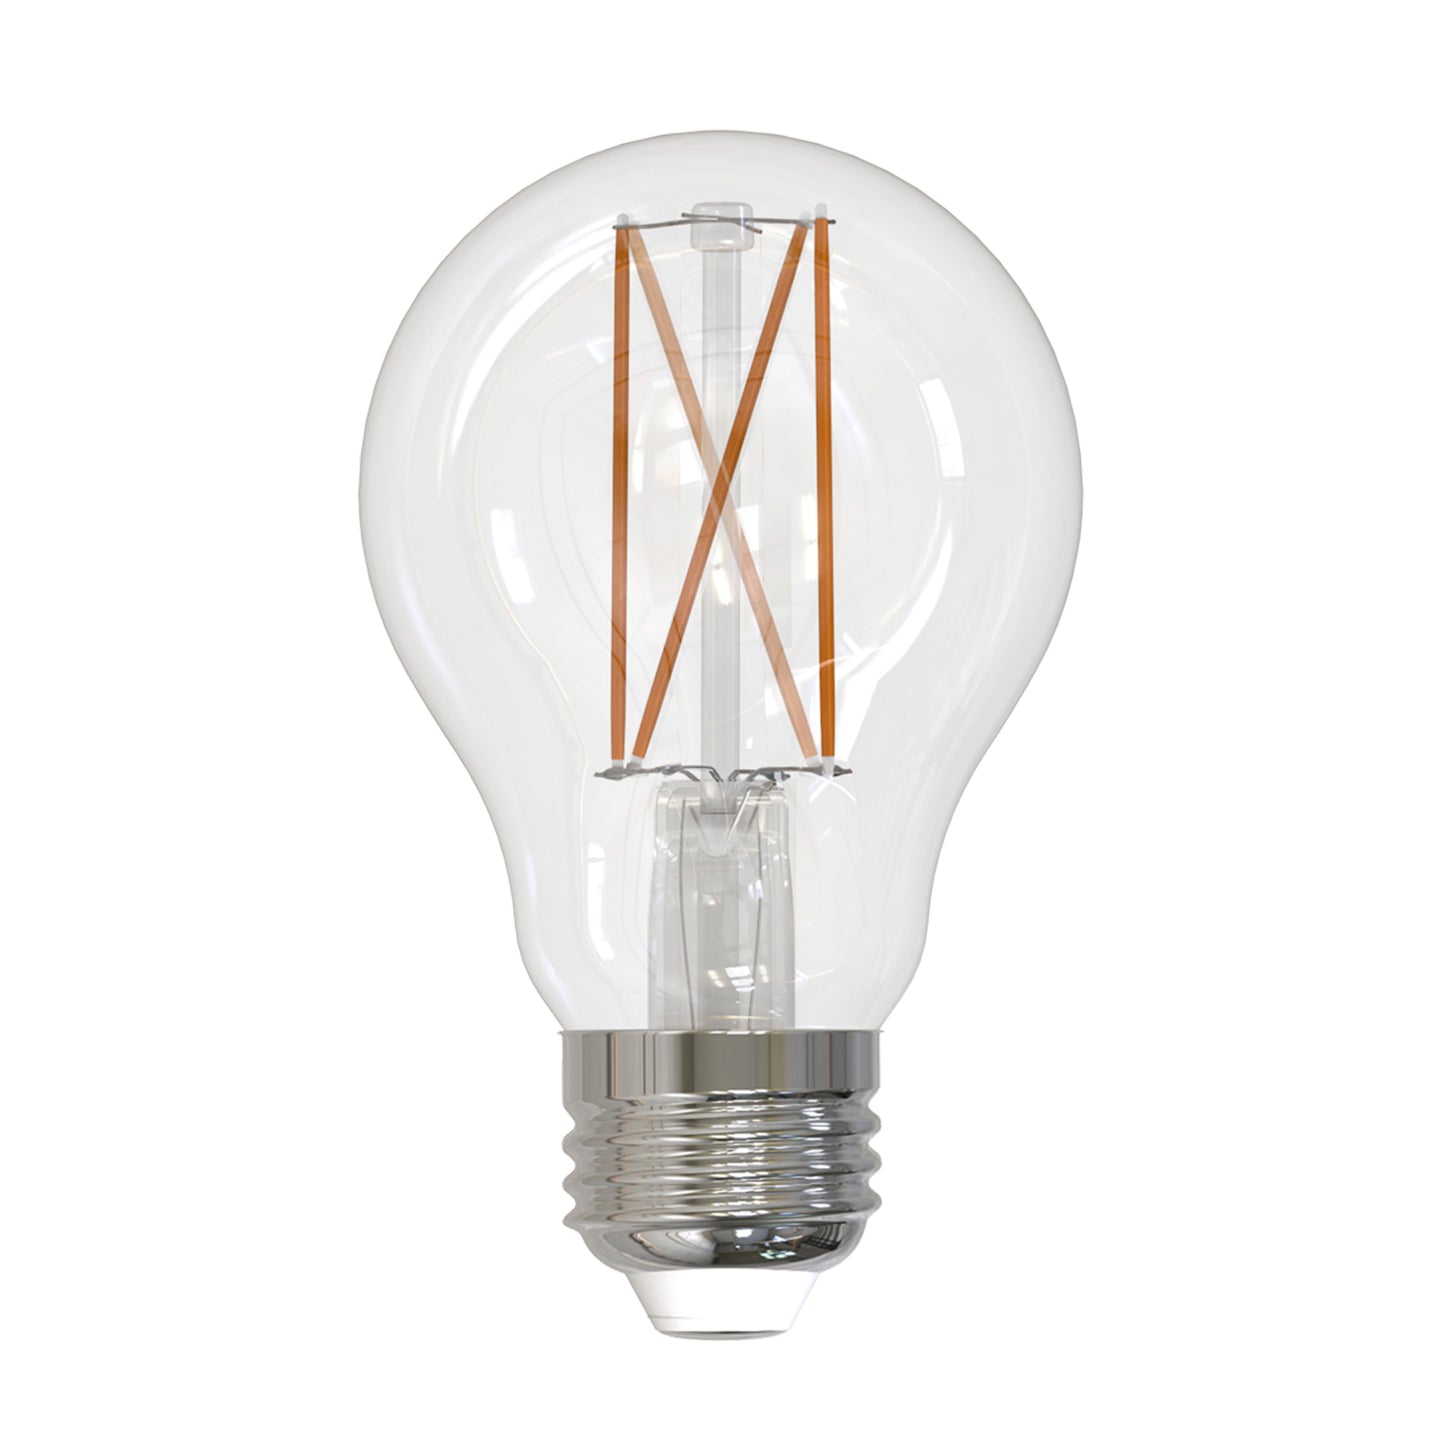 776768 - Filaments Dimmable A19 LED Light Bulb - 8.5 Watt - 3000K - 2 Pack